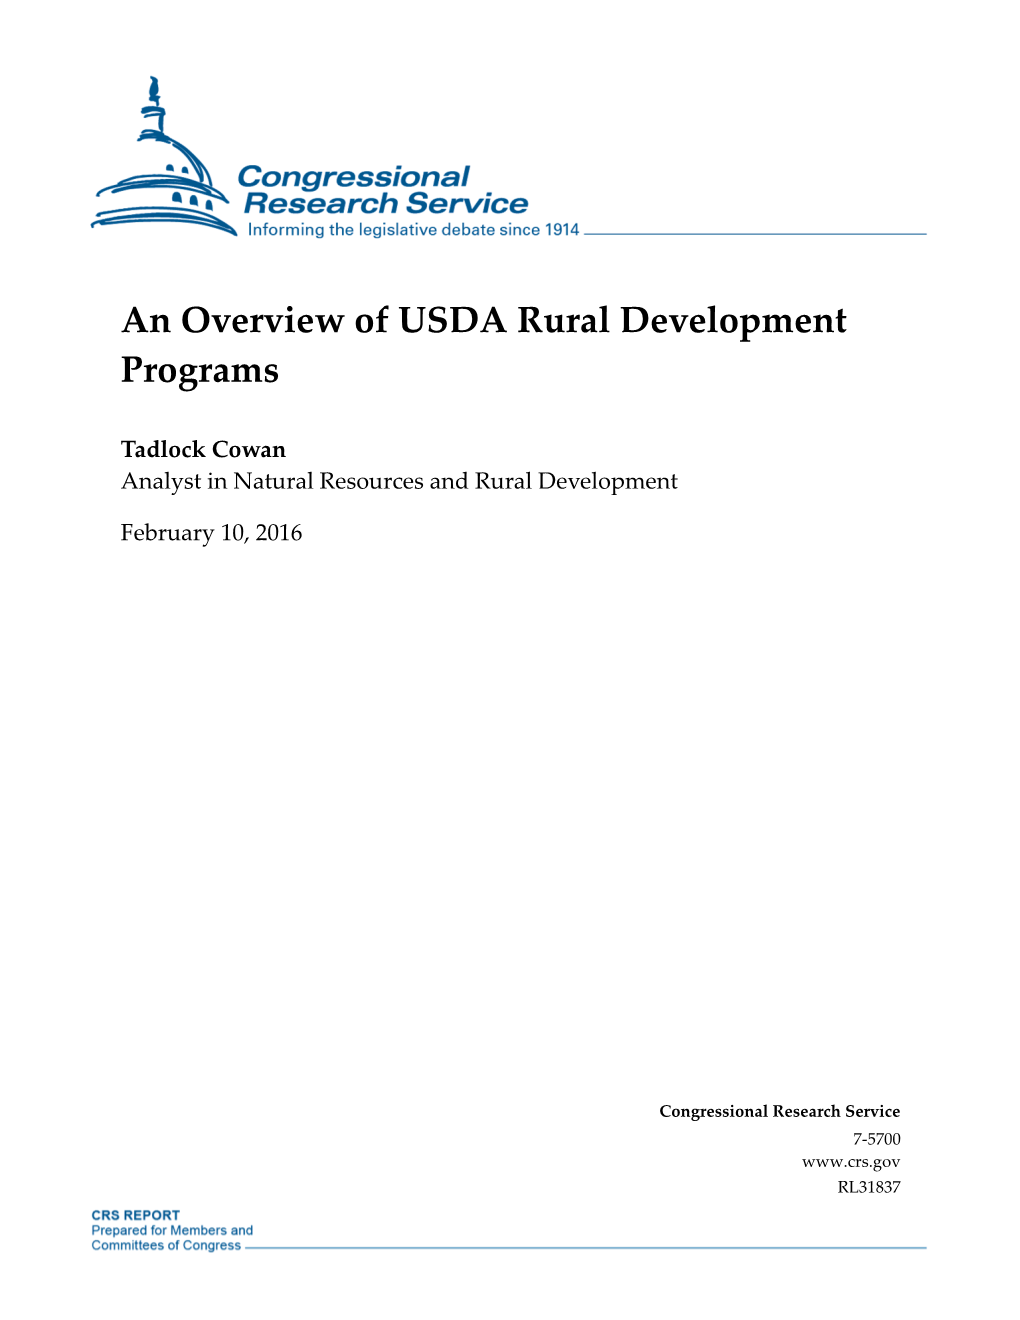 An Overview of USDA Rural Development Programs